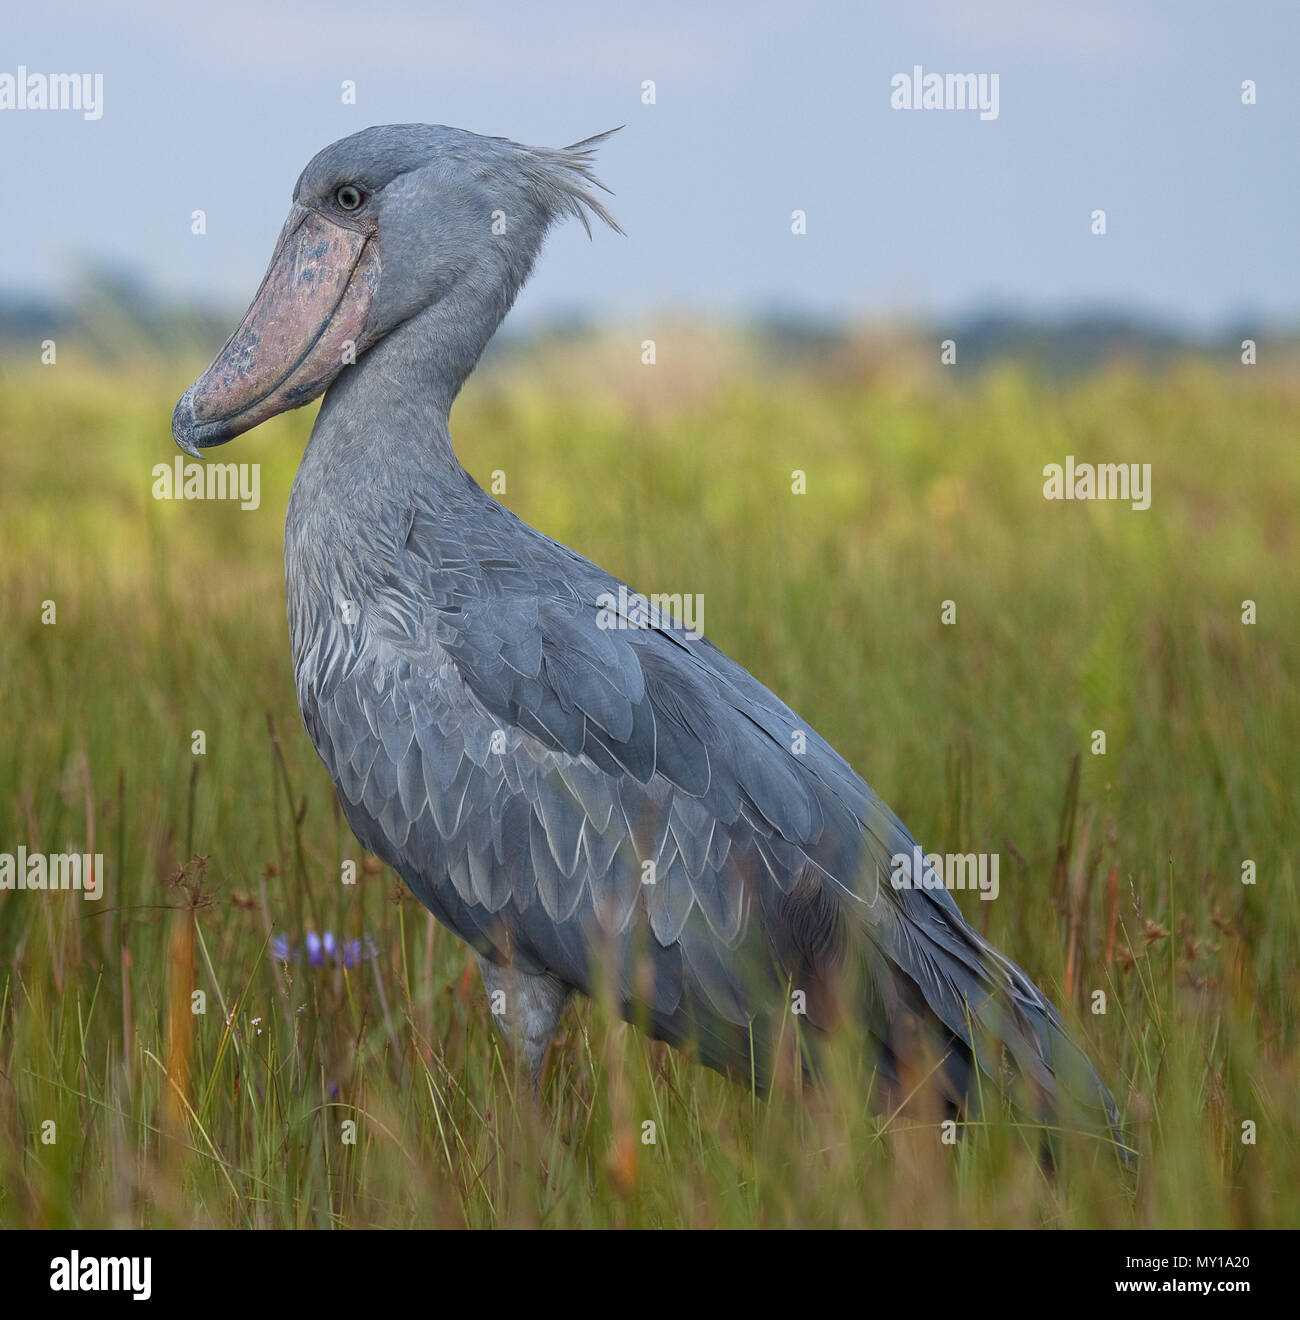 Shoe Beak Stork, Stork, Fauna, Animal 